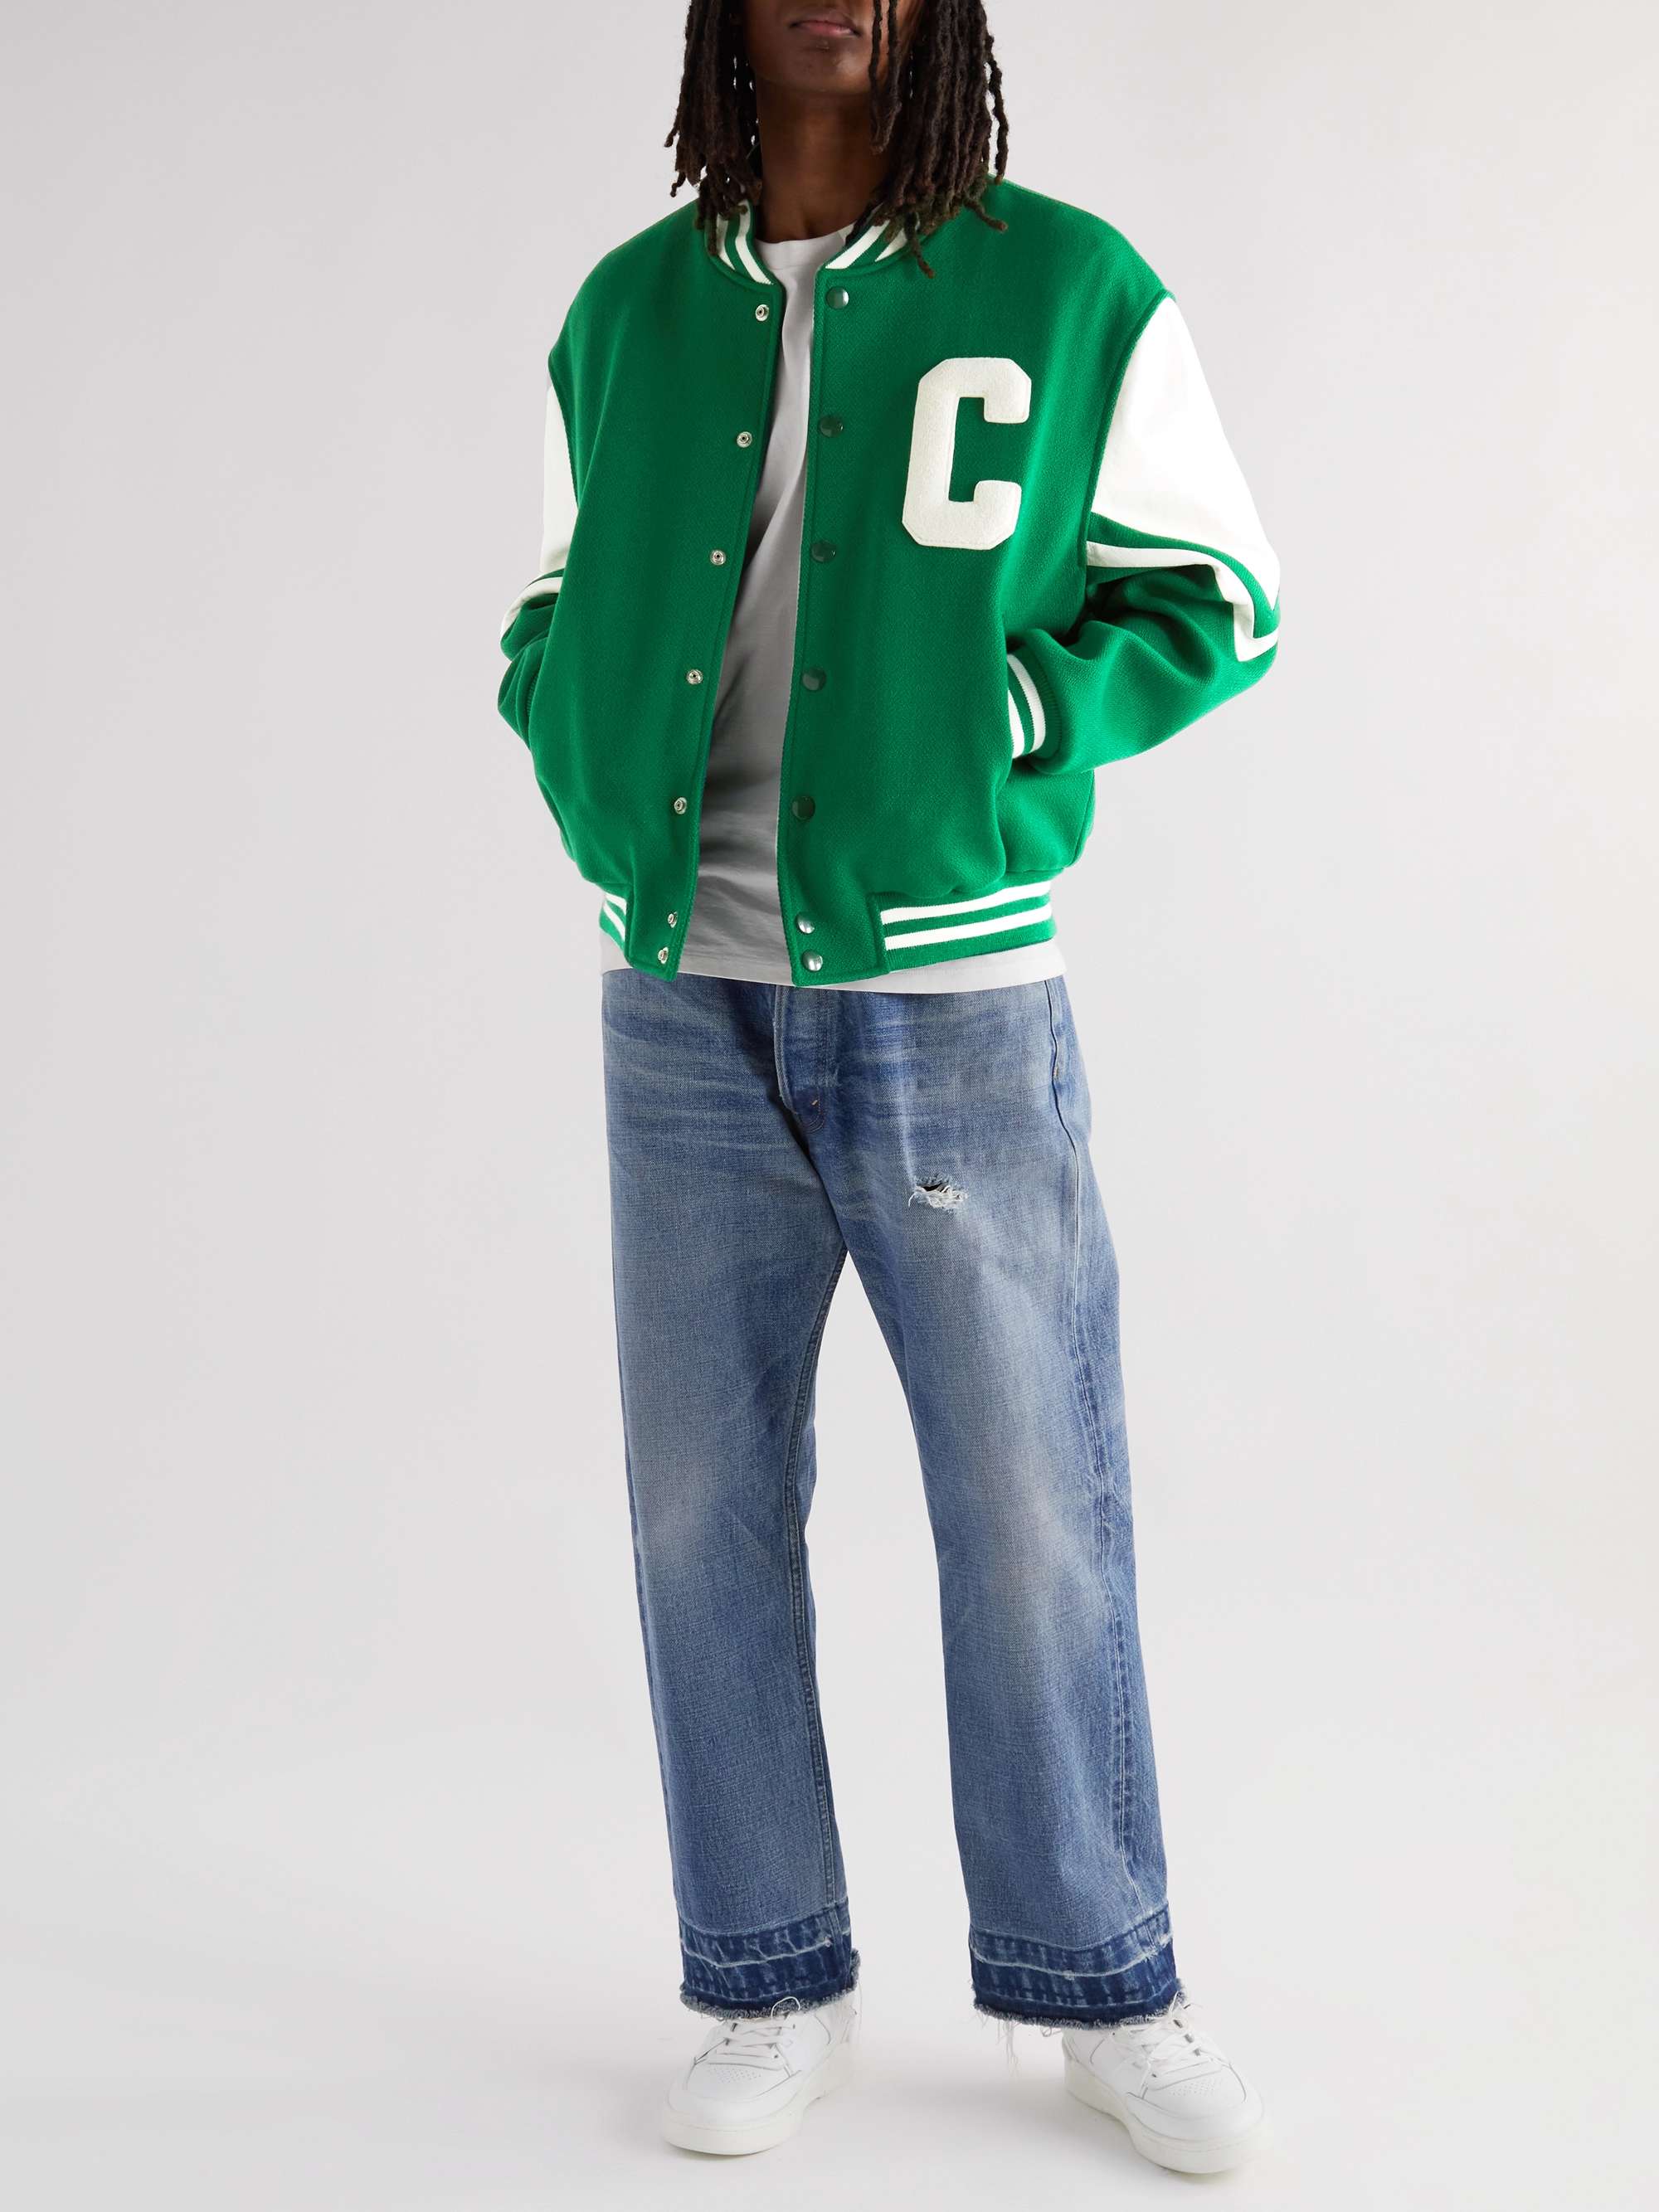 Celine Homme Men's Teddy Appliquéd Varsity Jacket